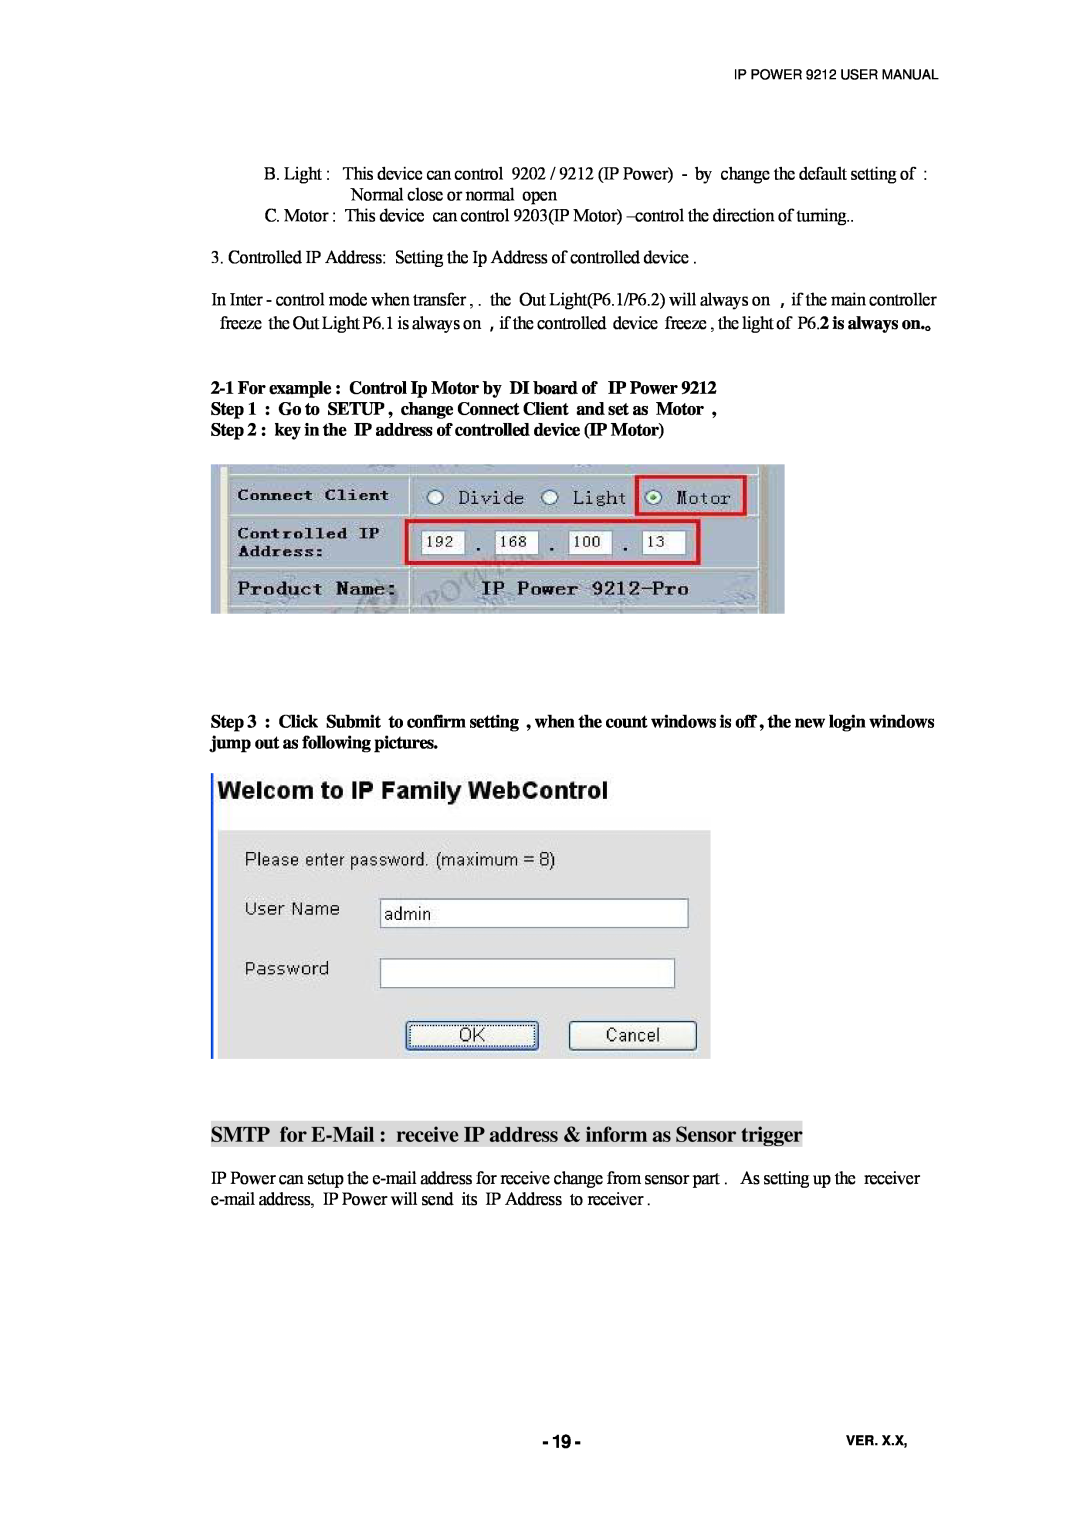 New Media Technology 9212 manual SMTP for E-Mail receive IP address & inform as Sensor trigger 